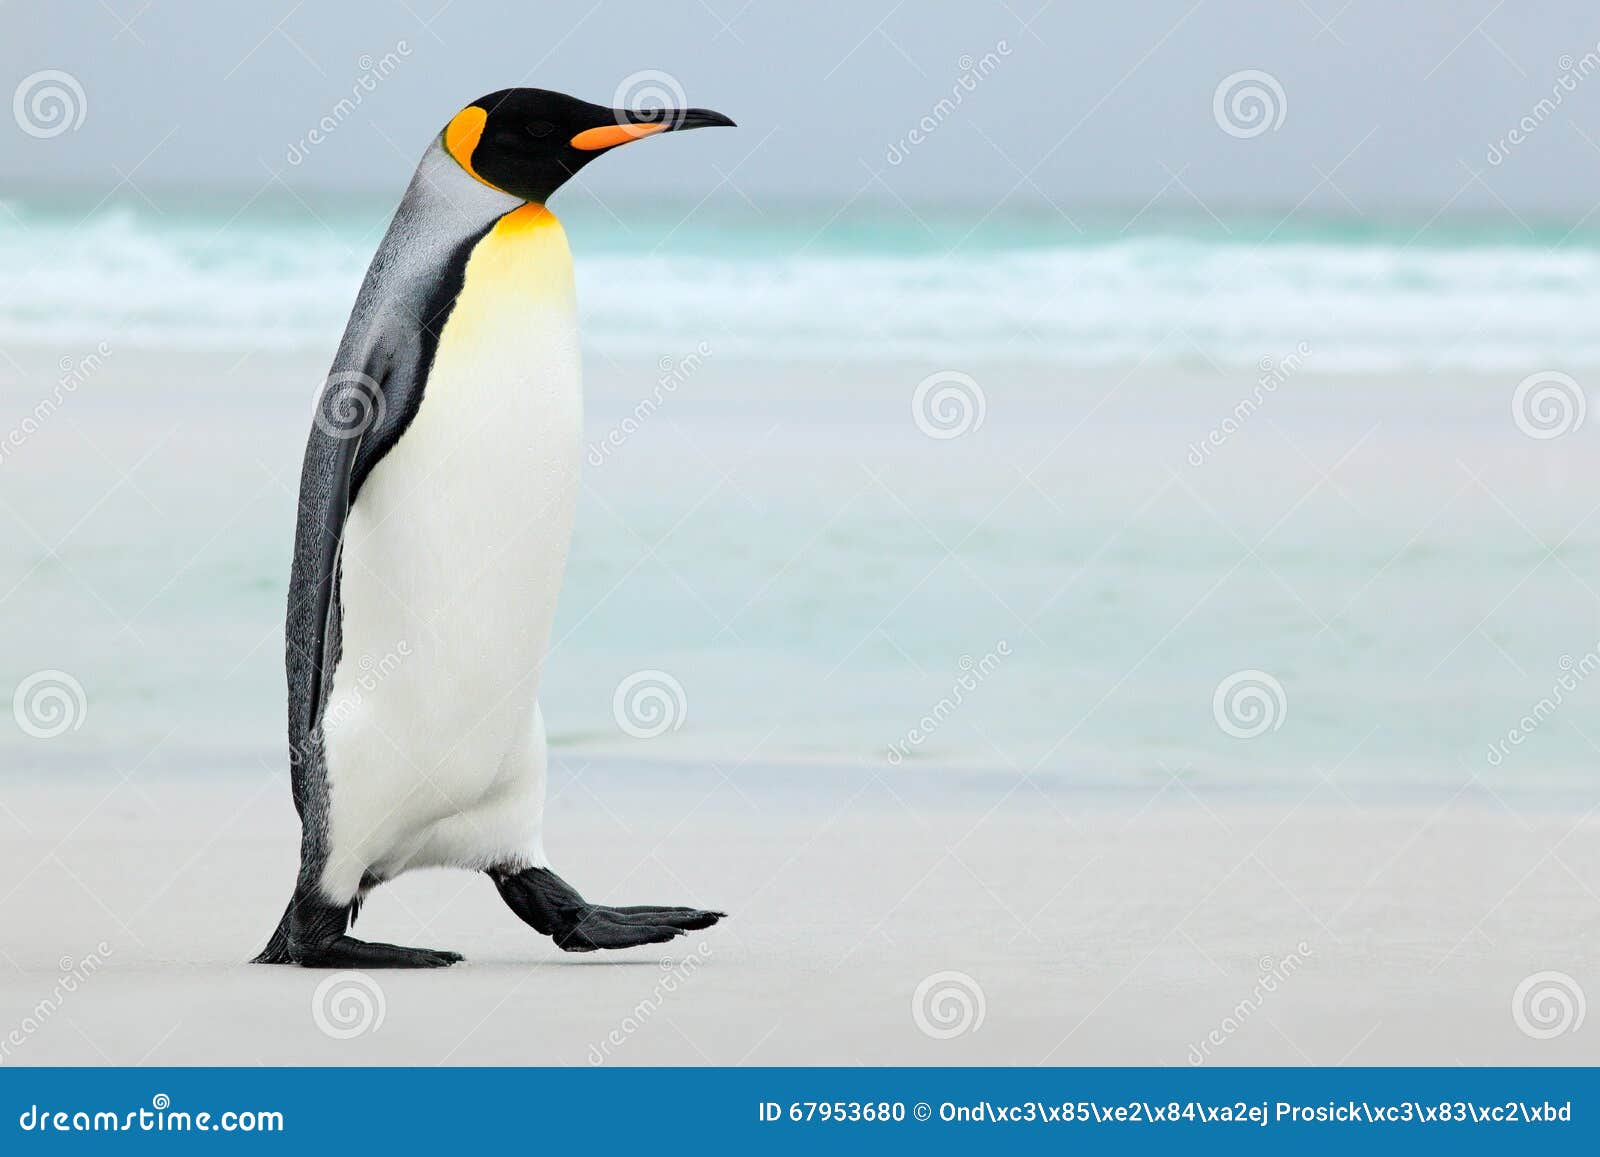 big king penguin going to blue water, atlantic ocean in falkland island, coast sea bird in the nature habitat